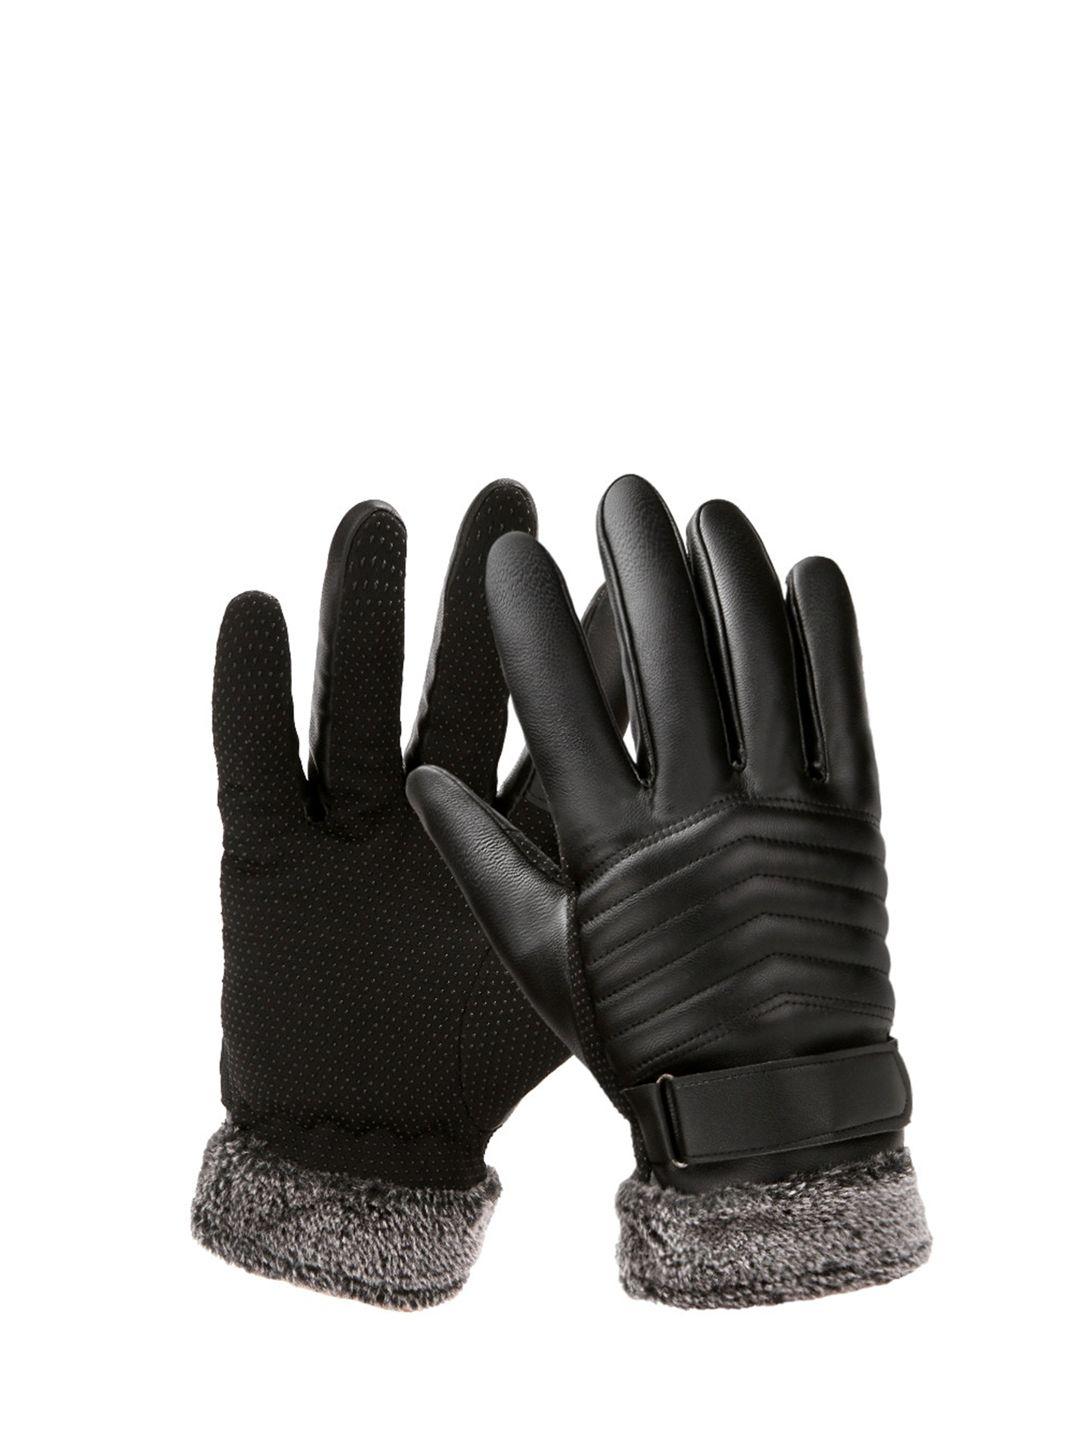 alexvyan-men-warm-winter-protective-windstorm-leather-riding-gloves